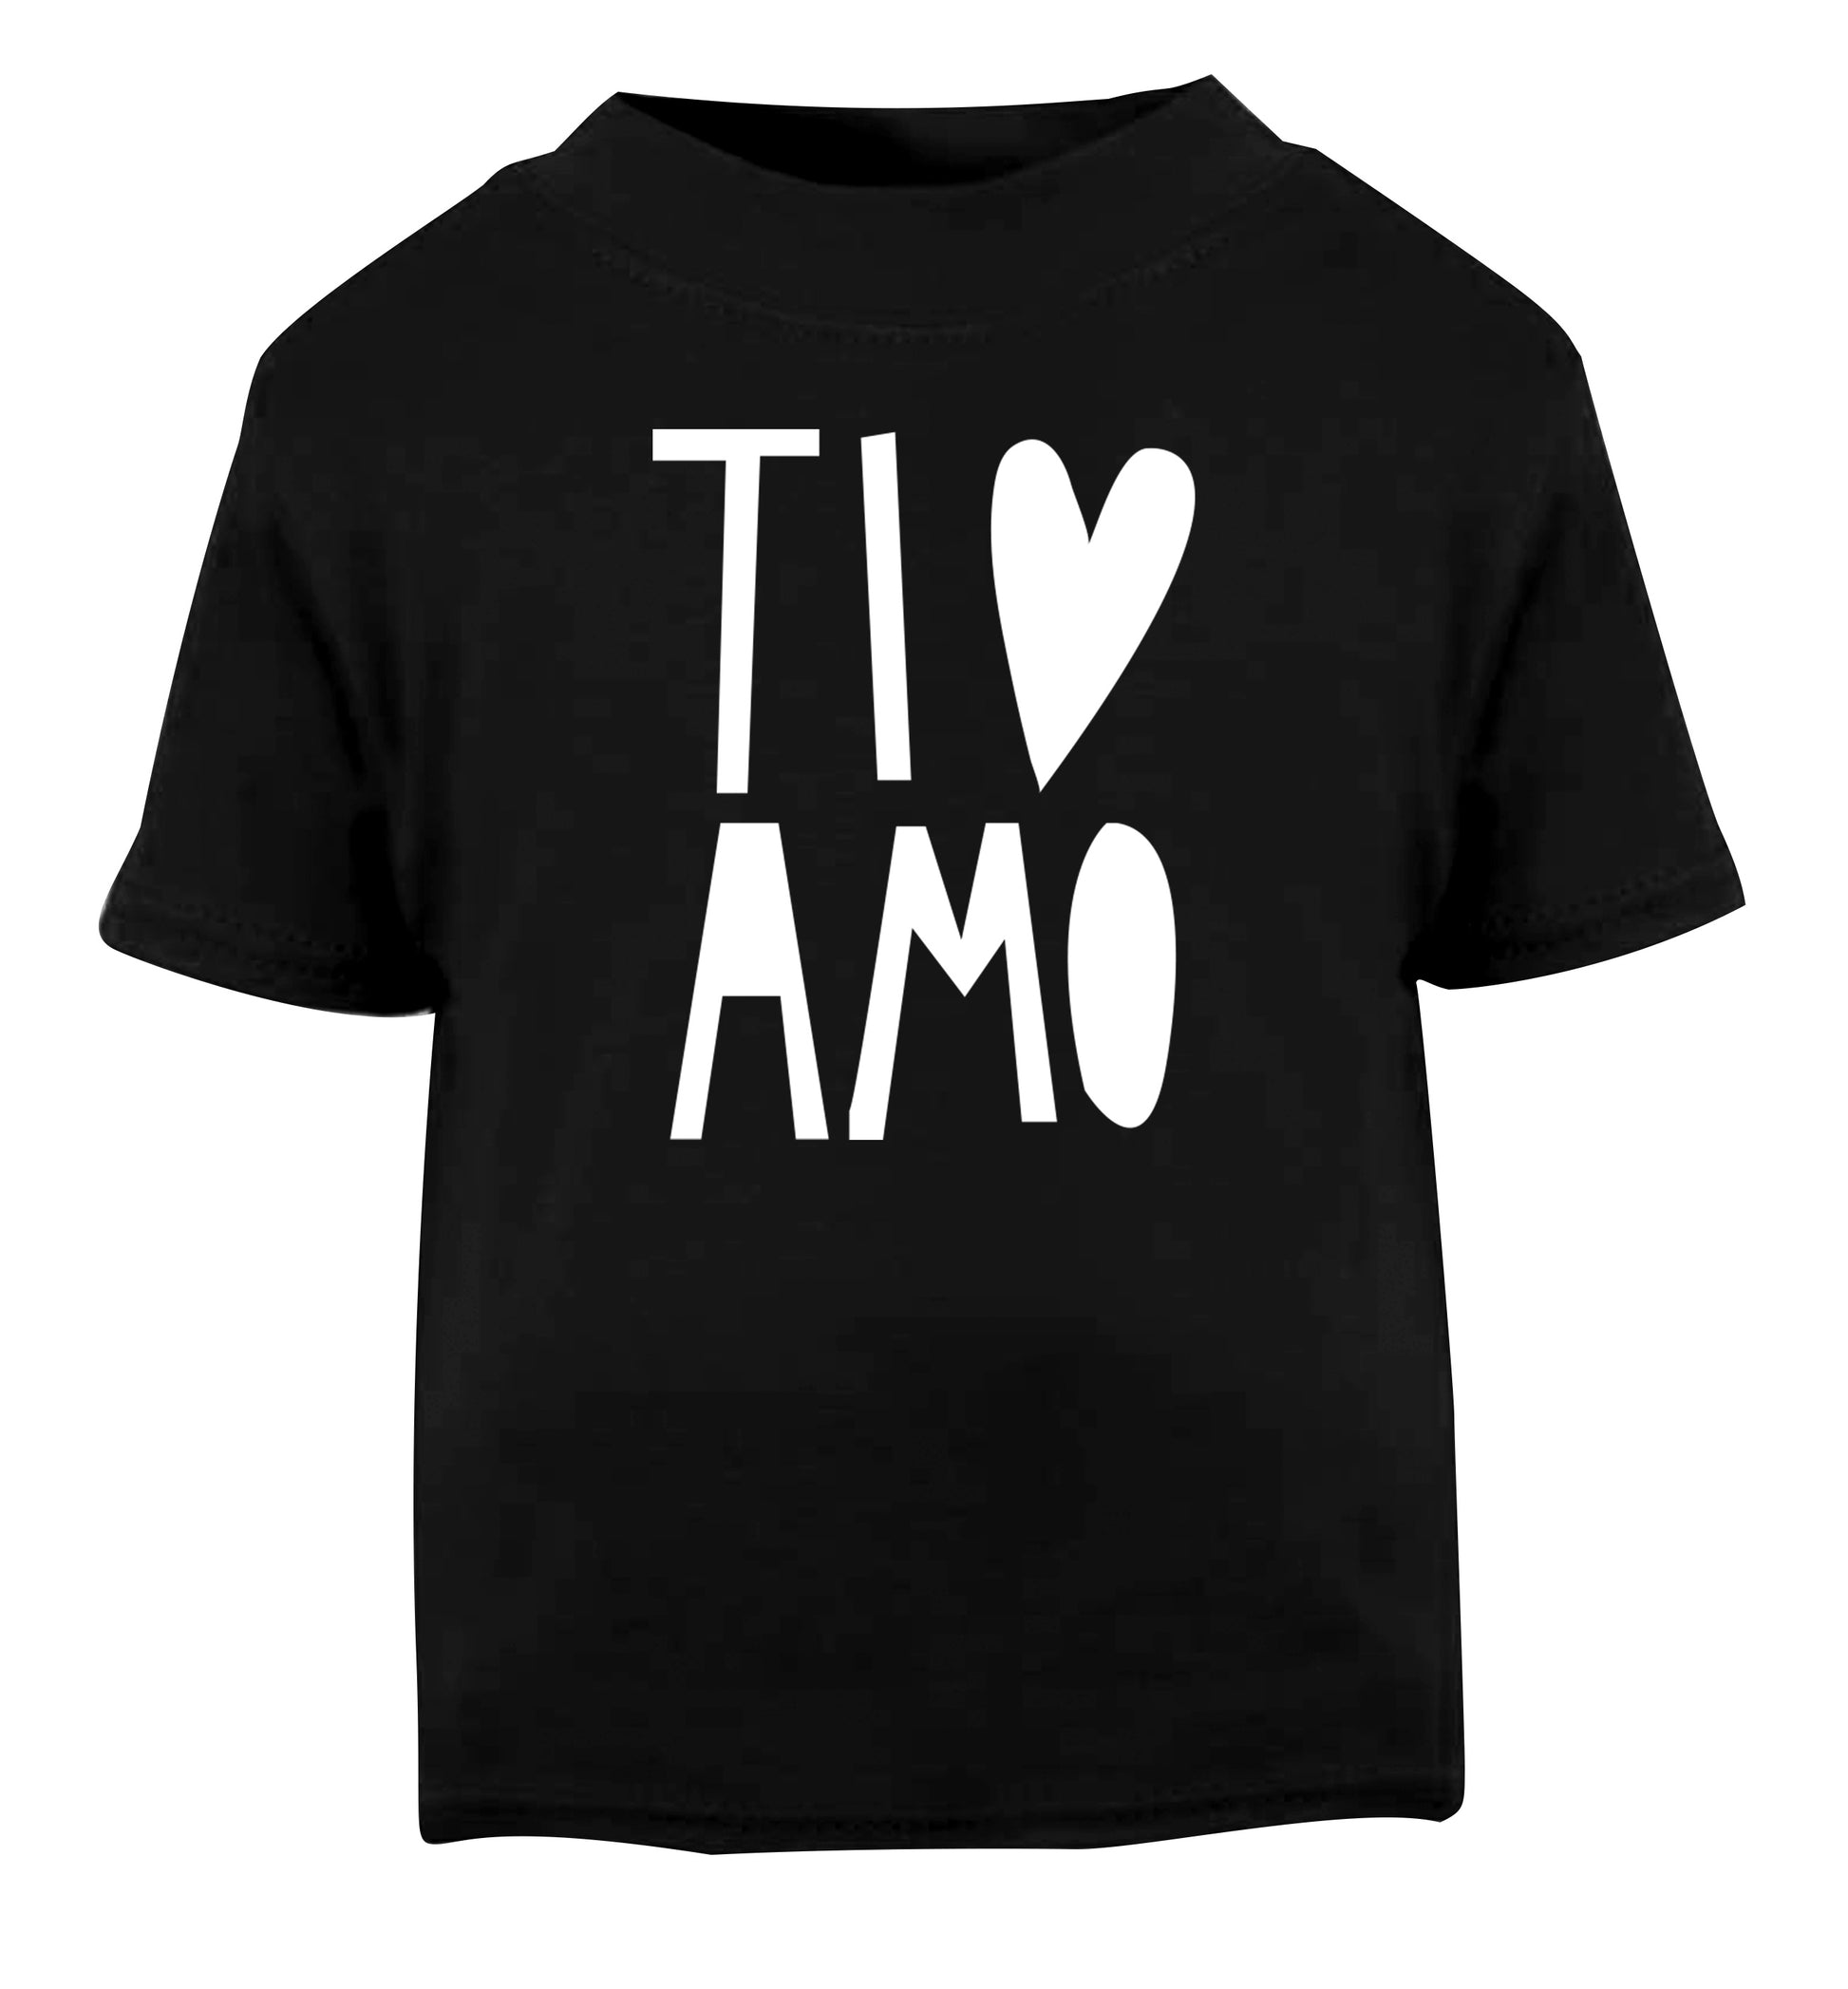 Ti amo - I love you Black Baby Toddler Tshirt 2 years